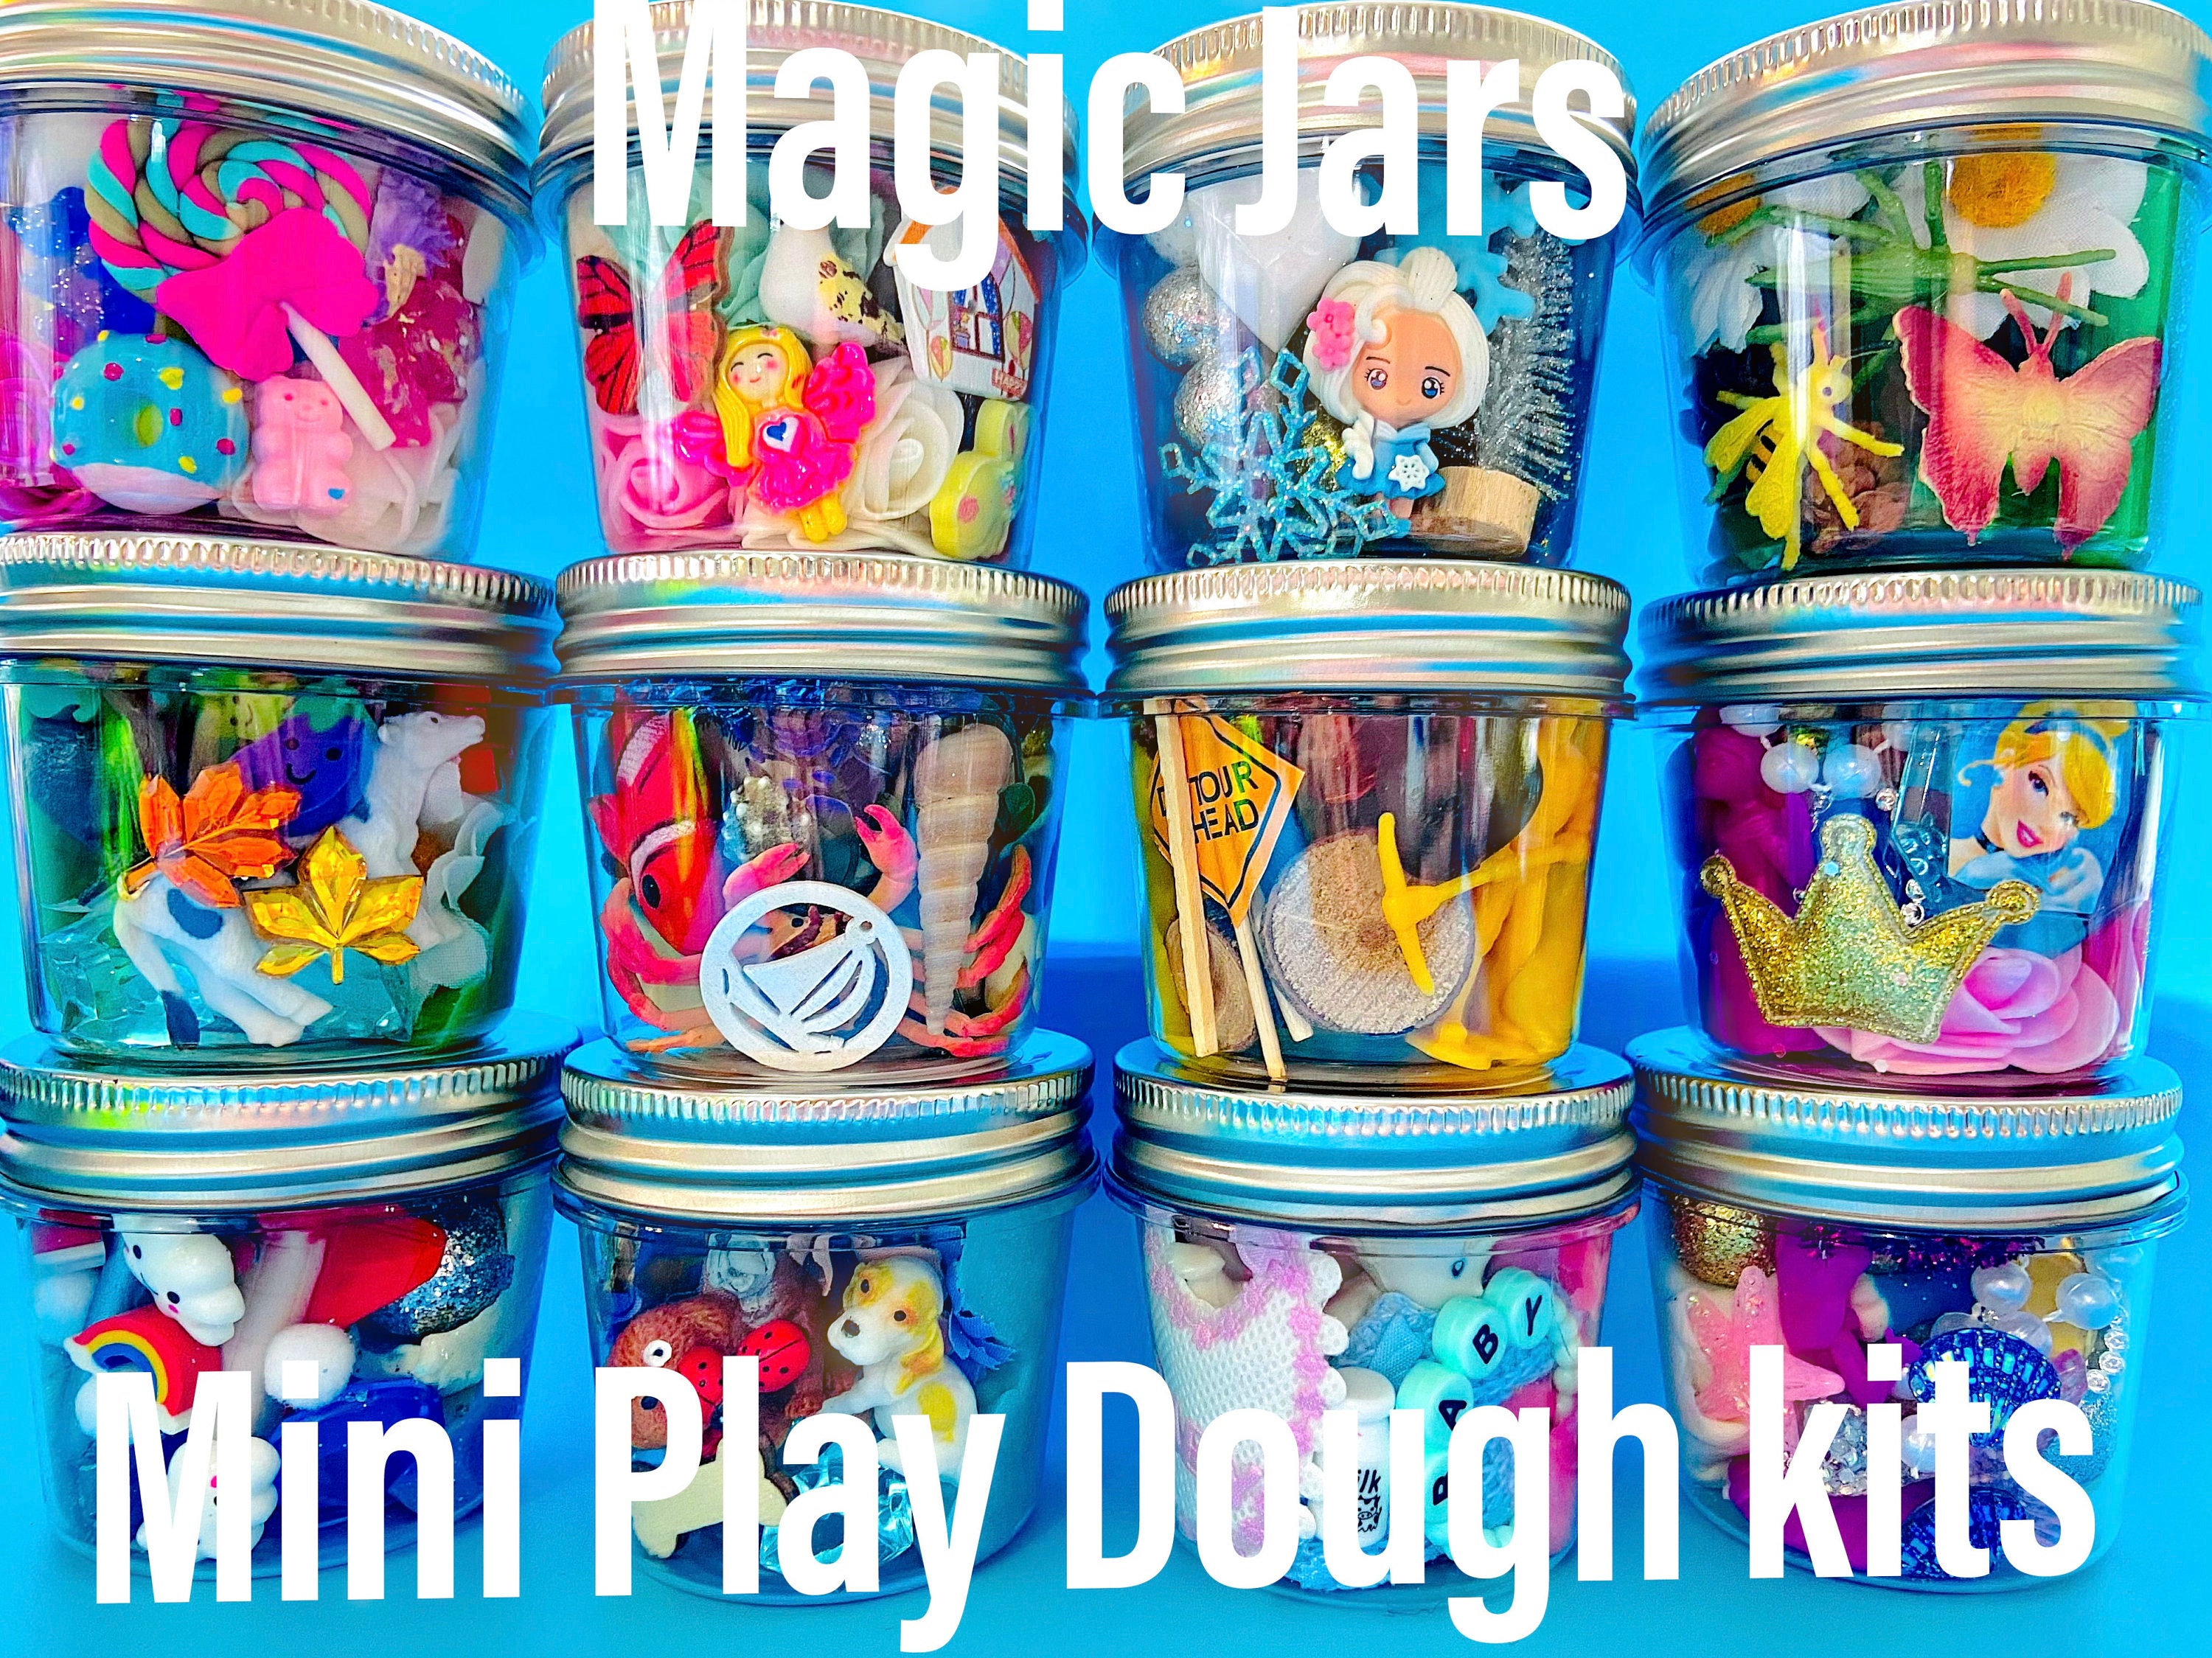 MAGIC Play Dough Jars, Play Dough Kit,kids Party Favors, Goodie